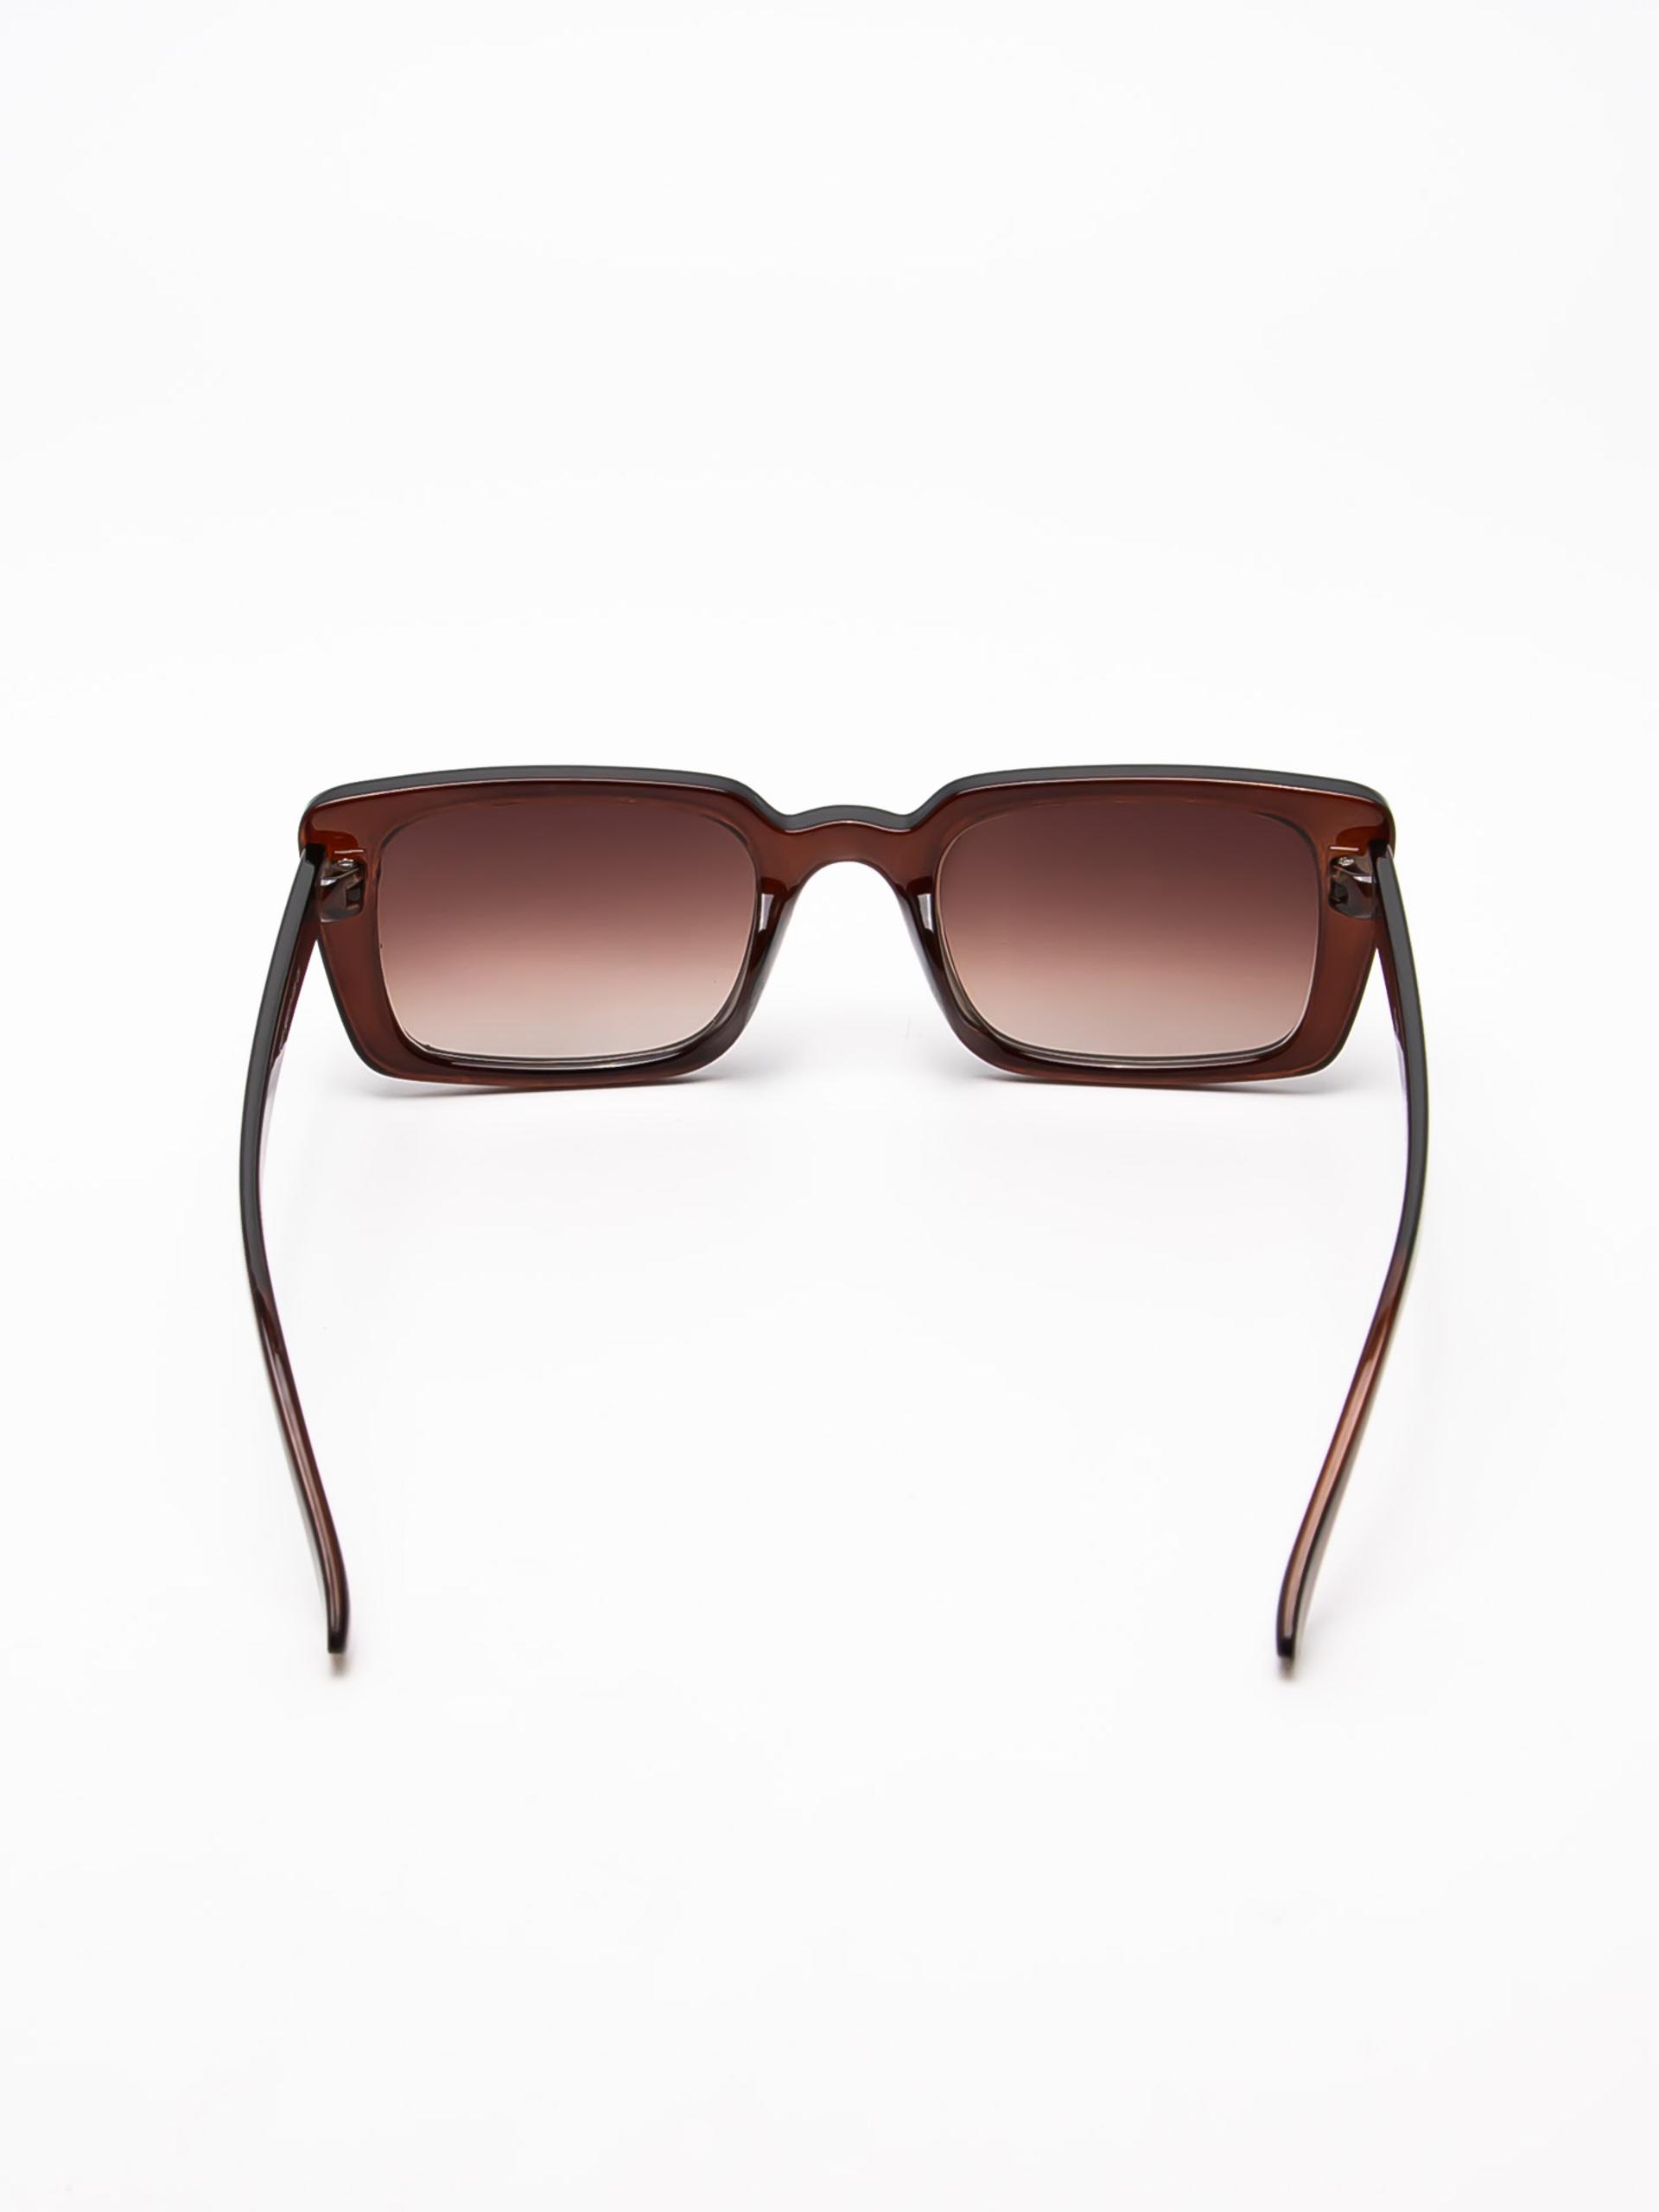 Mahsulot - “Солнцезащитные очки женские”